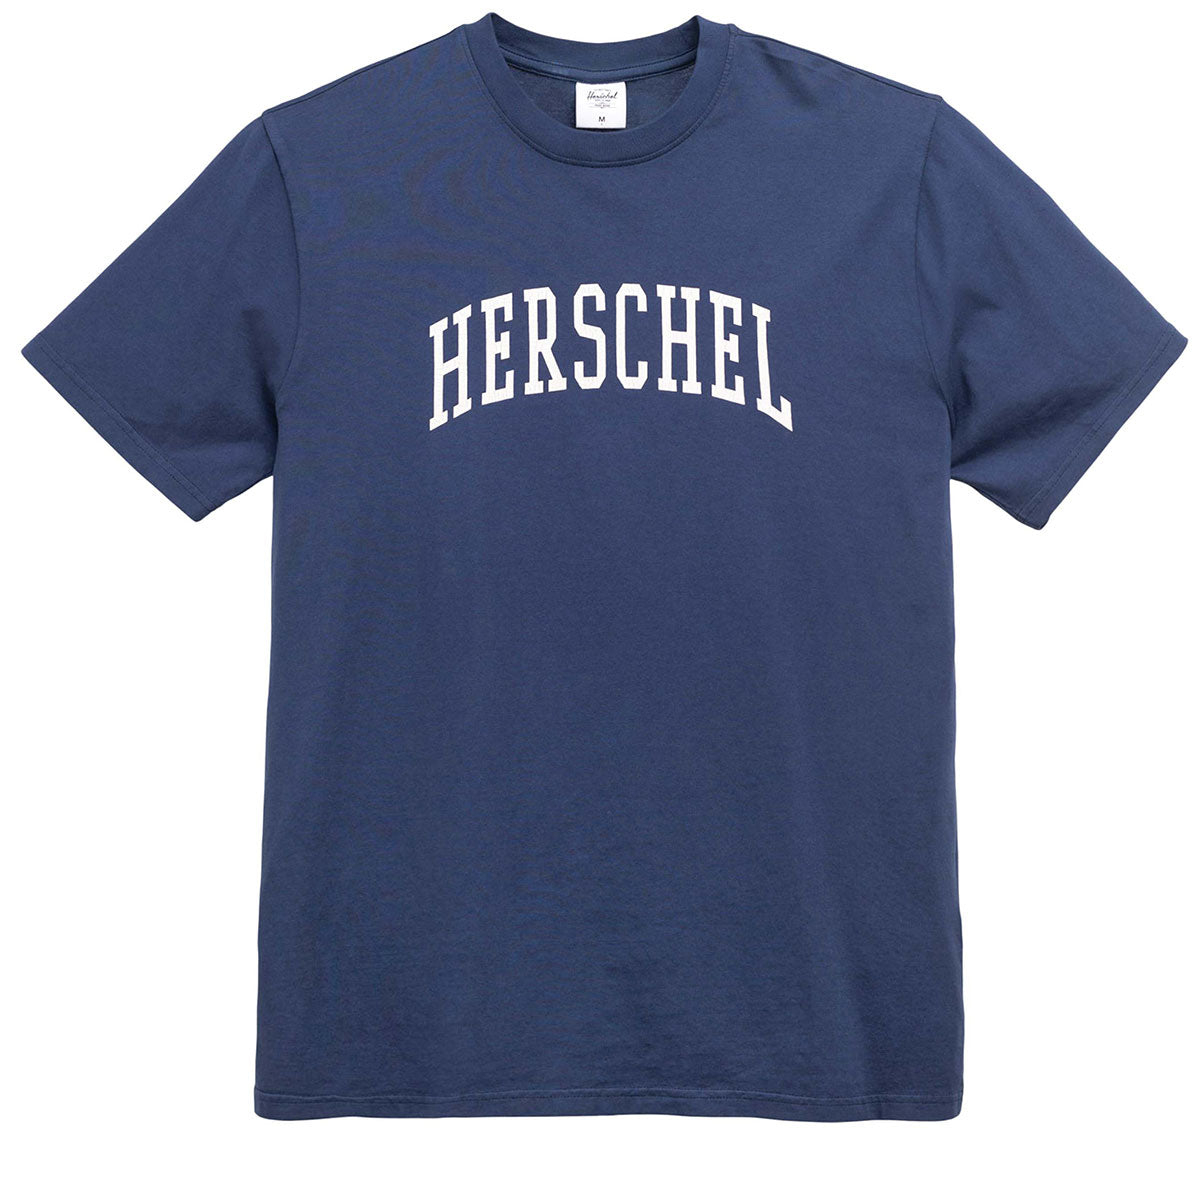 Herschel Supply Faculty T-Shirt - Dark Navy/Blanc De Blanc image 1